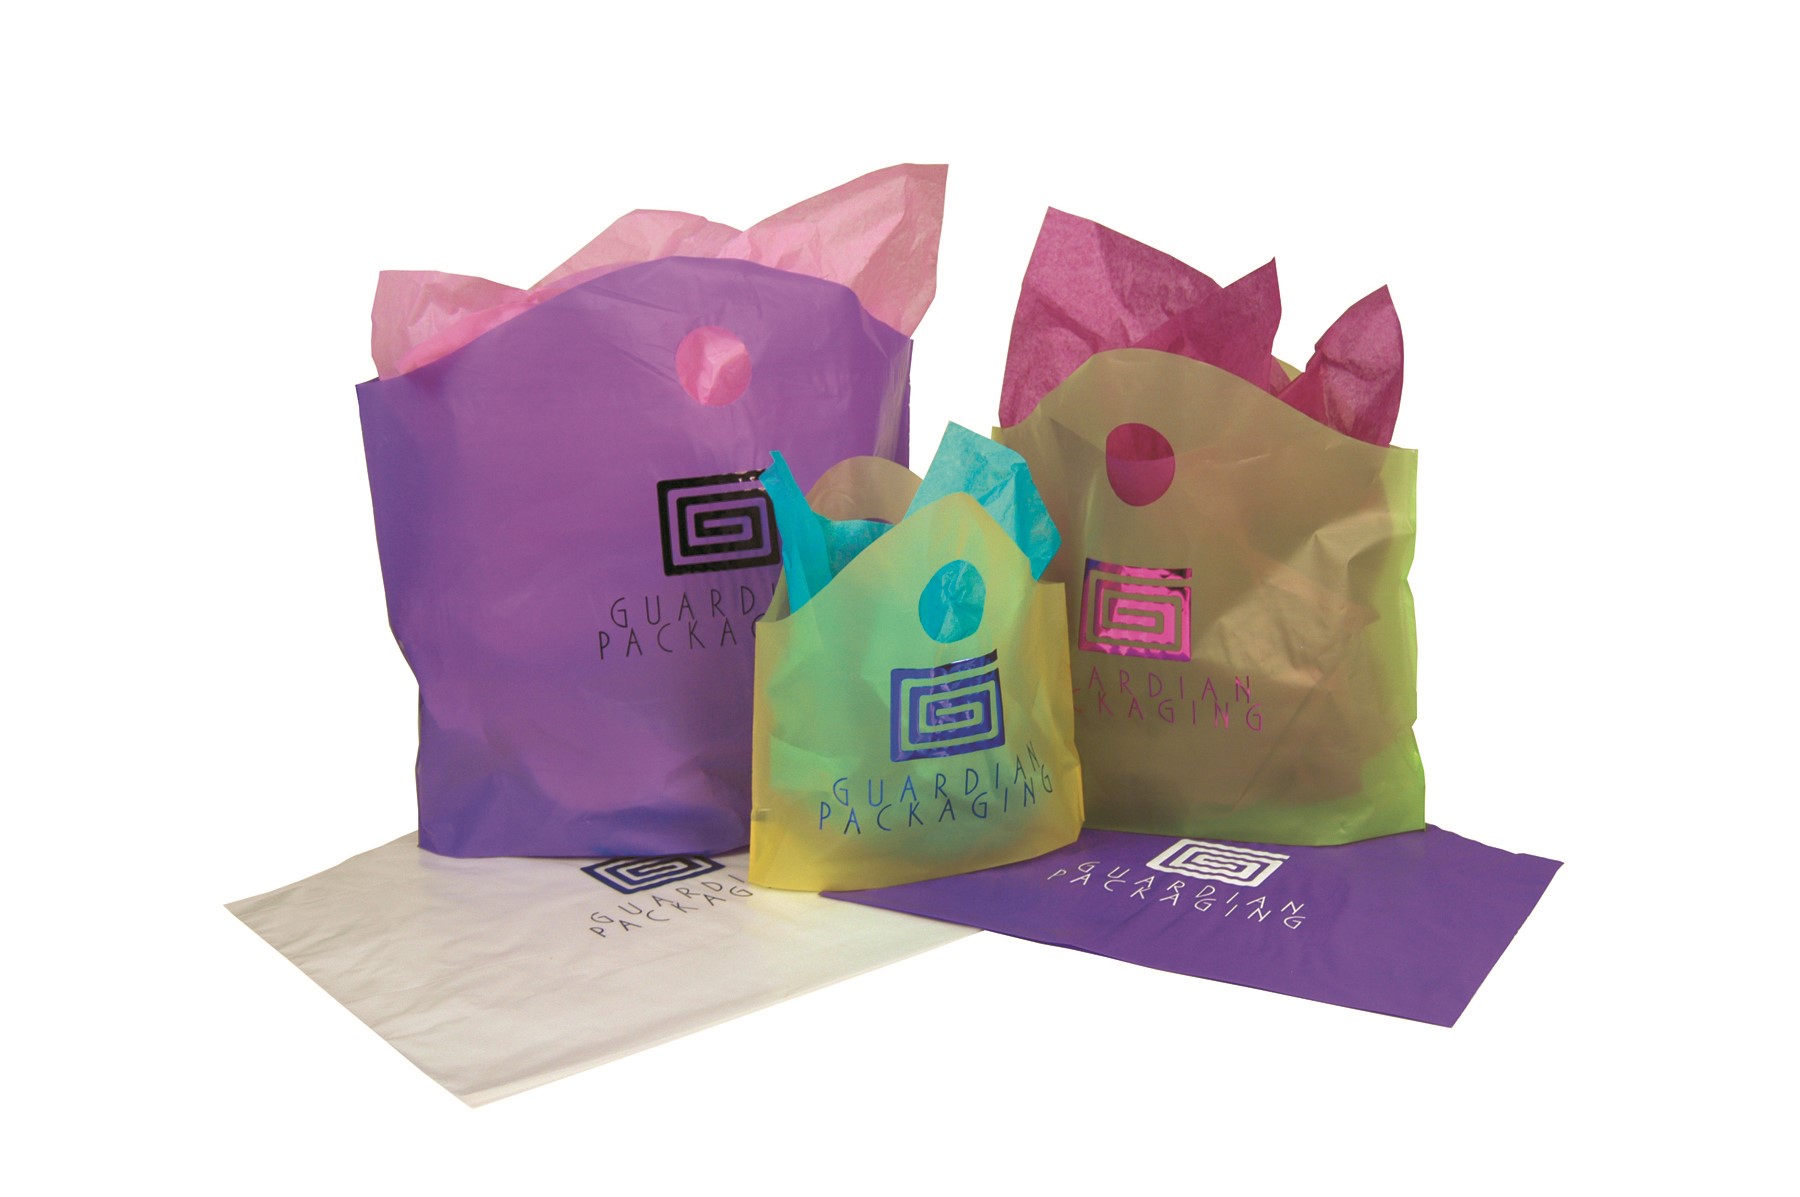 Plastic Merchandise Bags